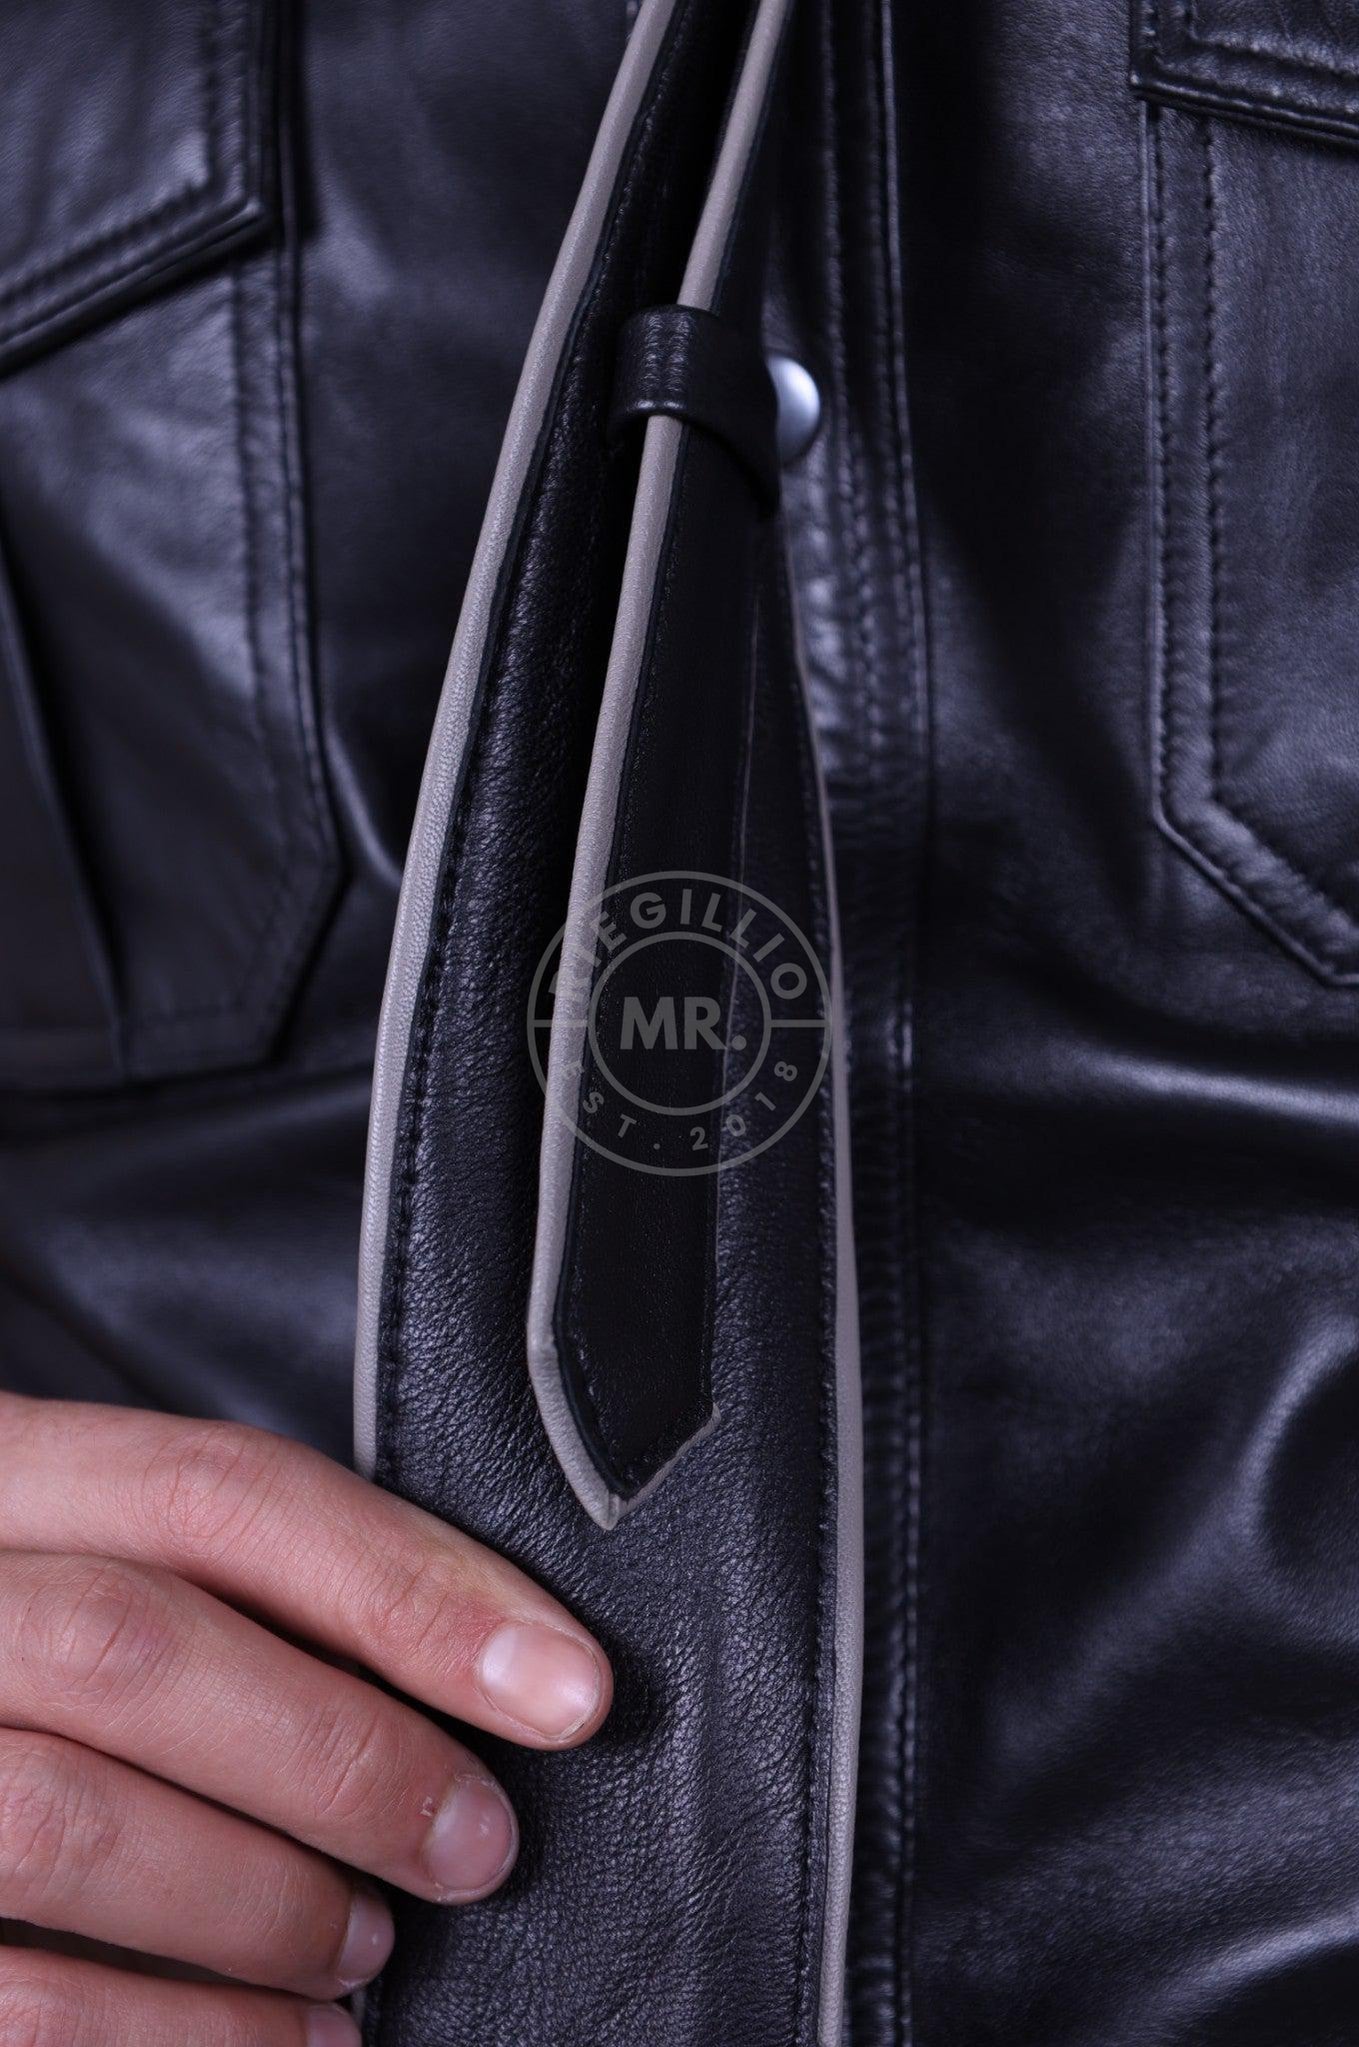 Black Leather Tie - GREY Piping at MR. Riegillio